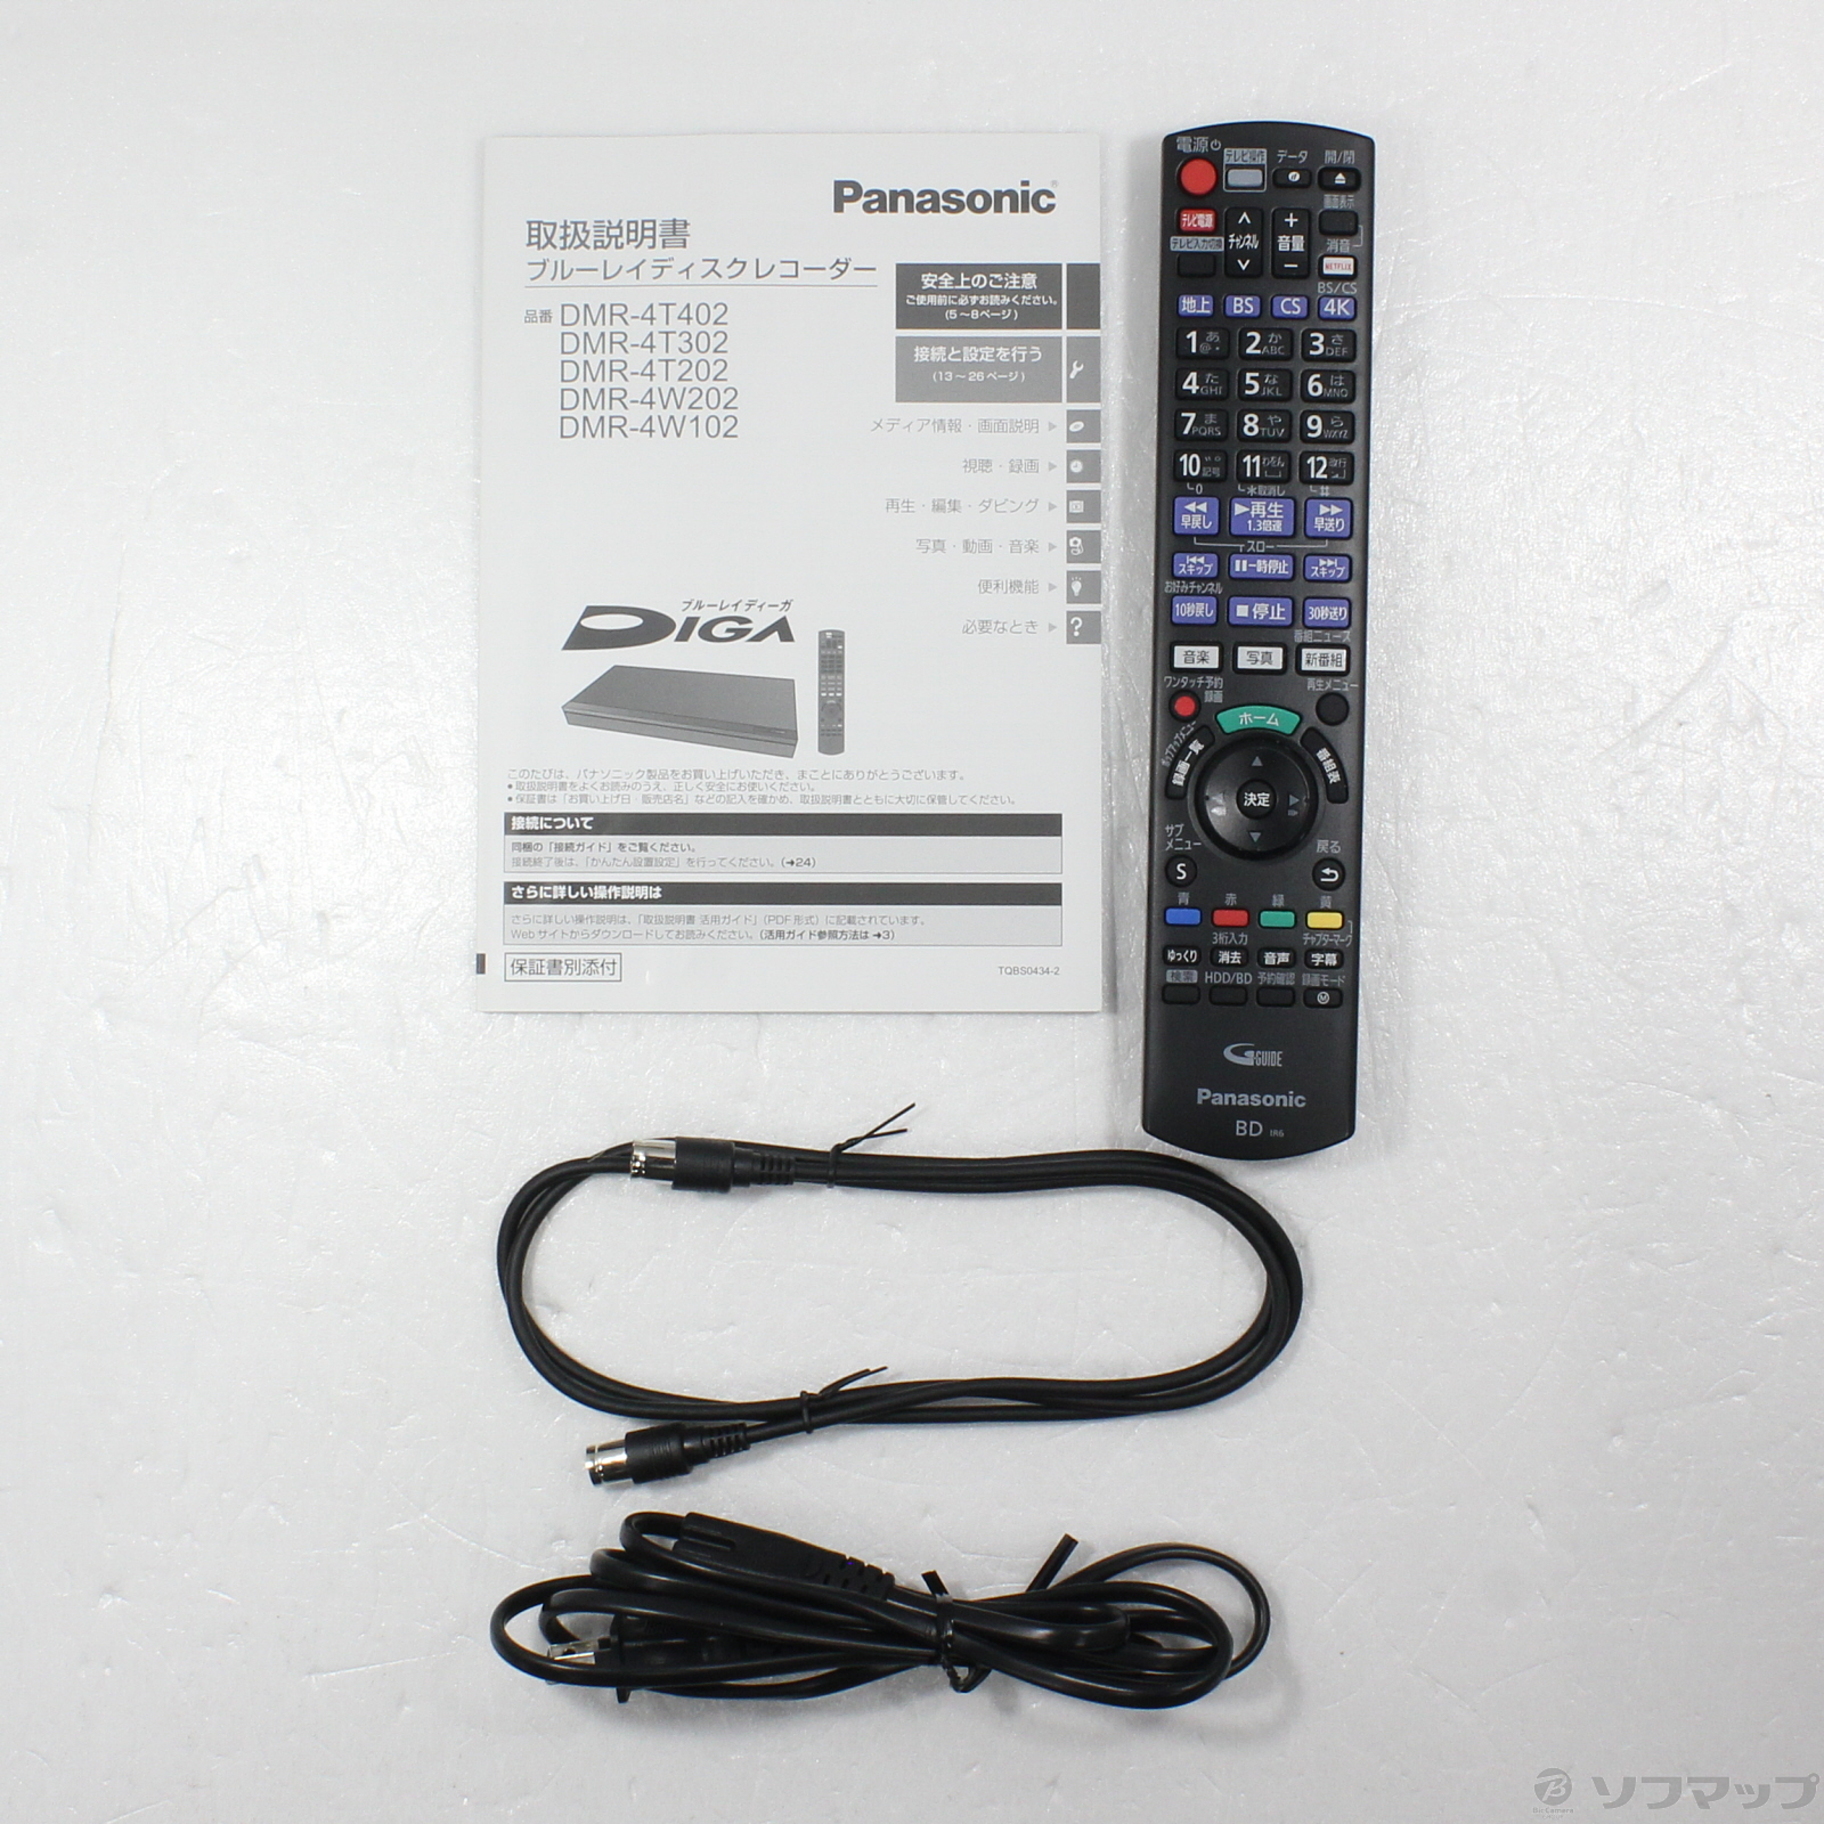 Panasonicブルーレイディスクレコーダー DMR-4W102 - 映像機器